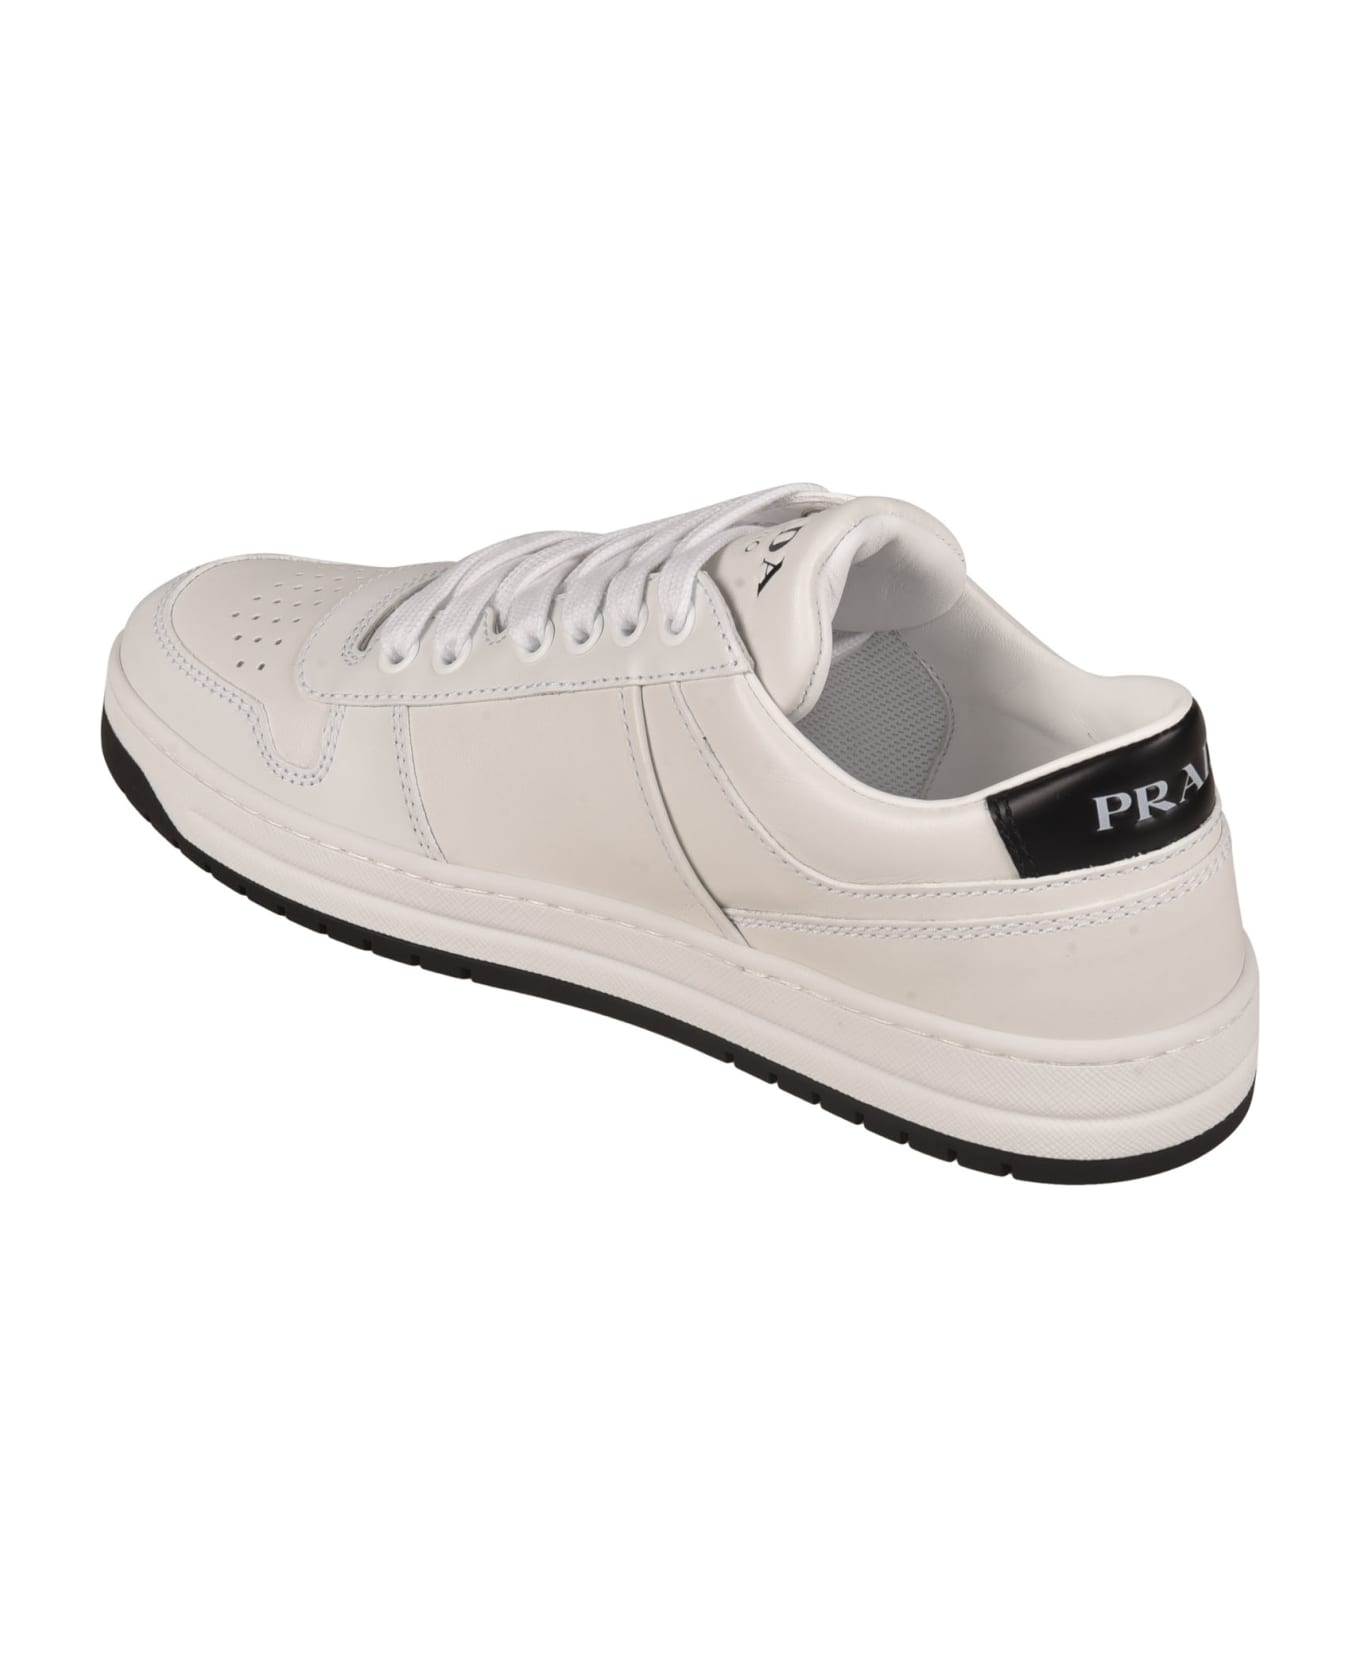 Prada Logo Plaque Perforated Sneakers - White/Black スニーカー